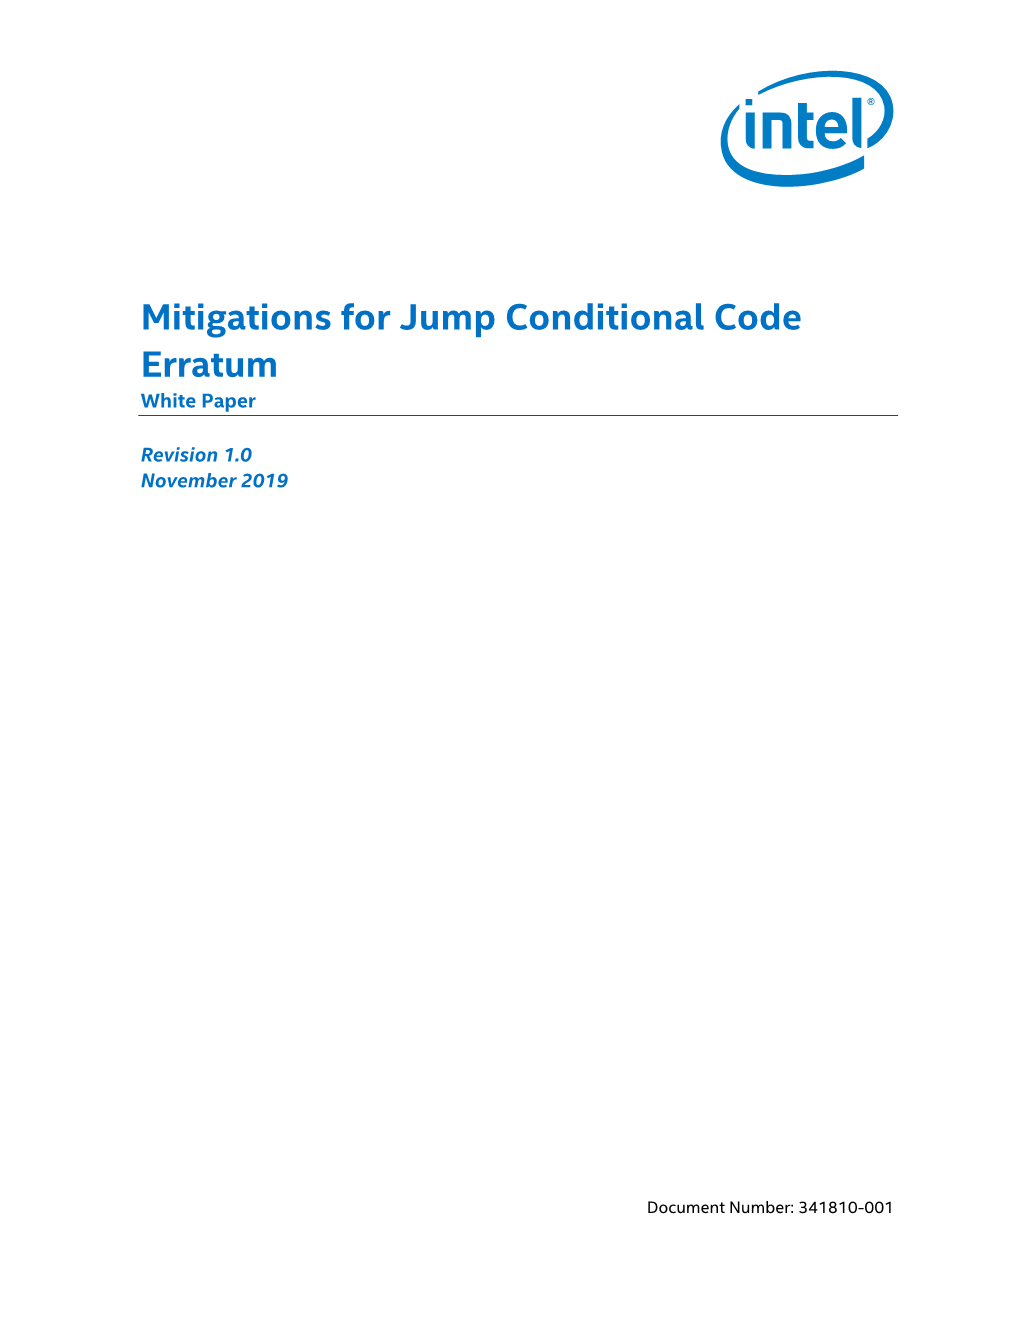 Mitigations for Jump Conditional Code Erratum White Paper